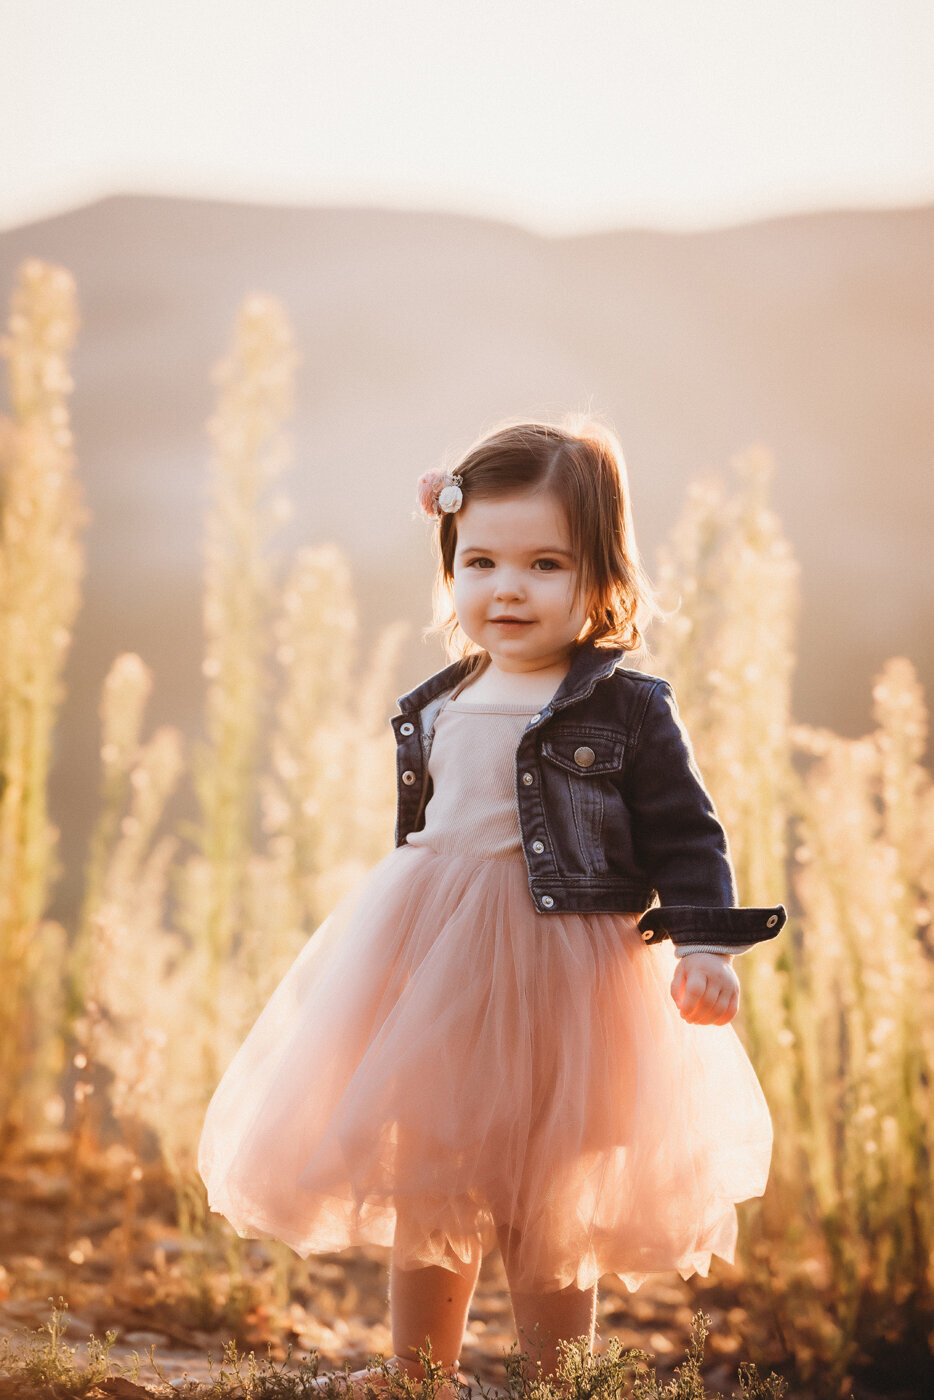 Toddler girl smiling at the camera while wearing a pink tutu dress